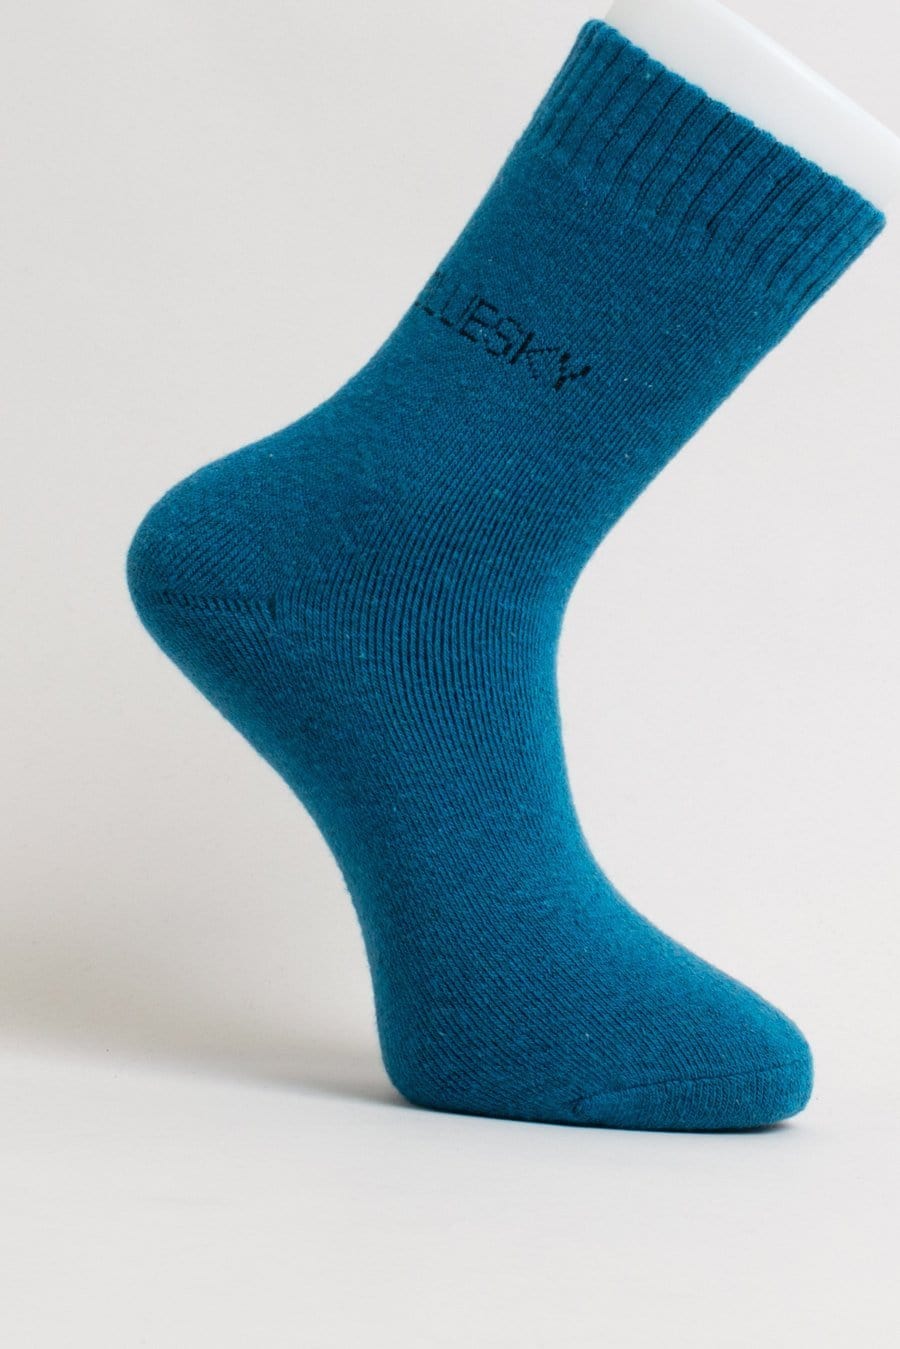 Blue Sky Women&#39;s Socks Teal / L Men&#39;s Socks - Merino Wool